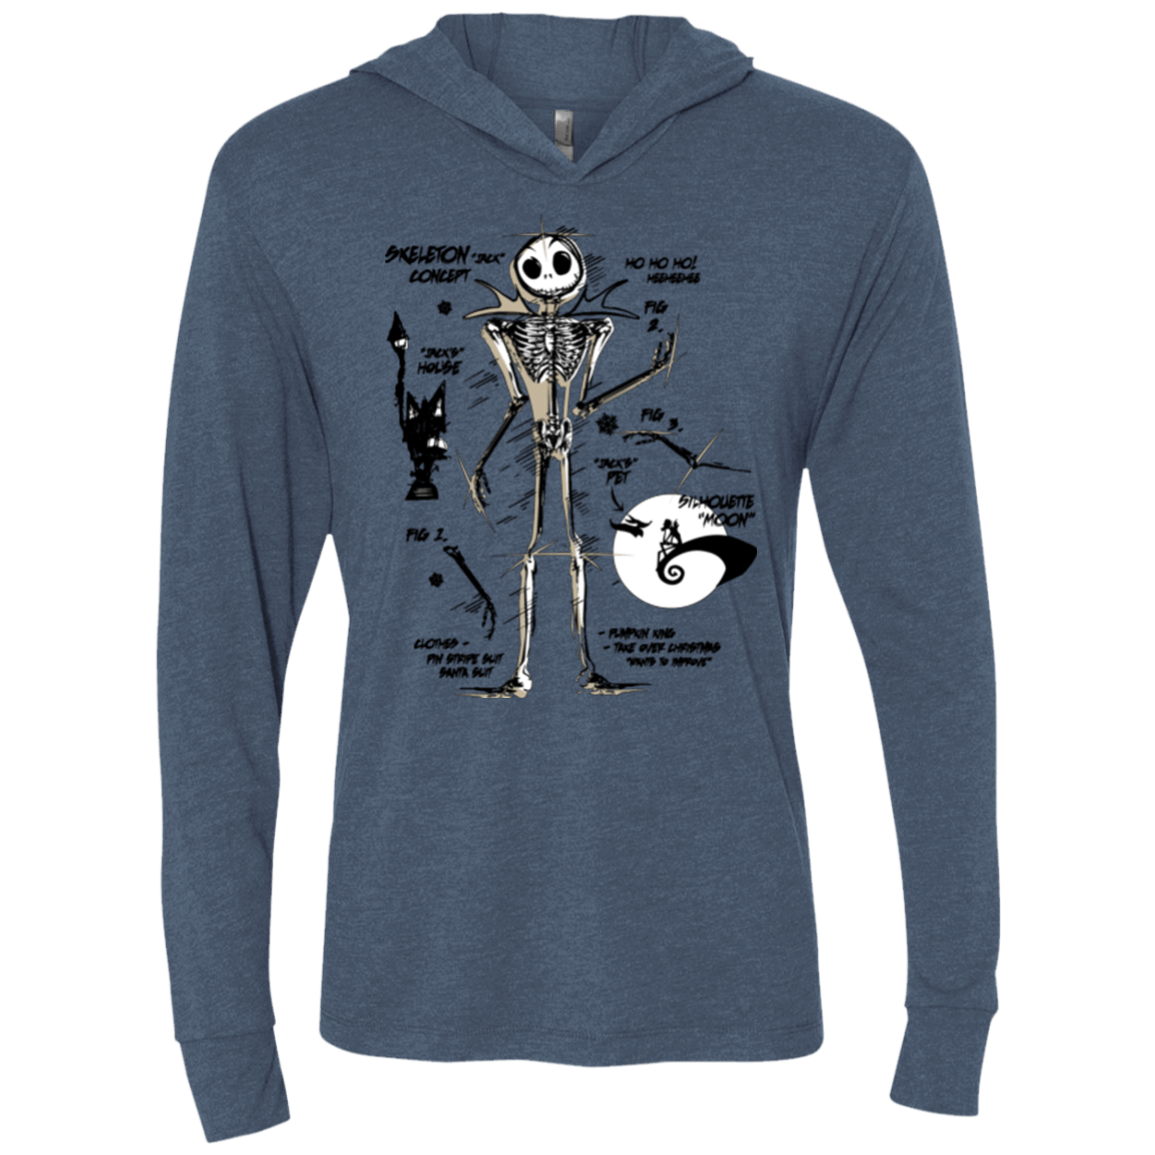 T-Shirts Indigo / X-Small Skeleton Concept Triblend Long Sleeve Hoodie Tee